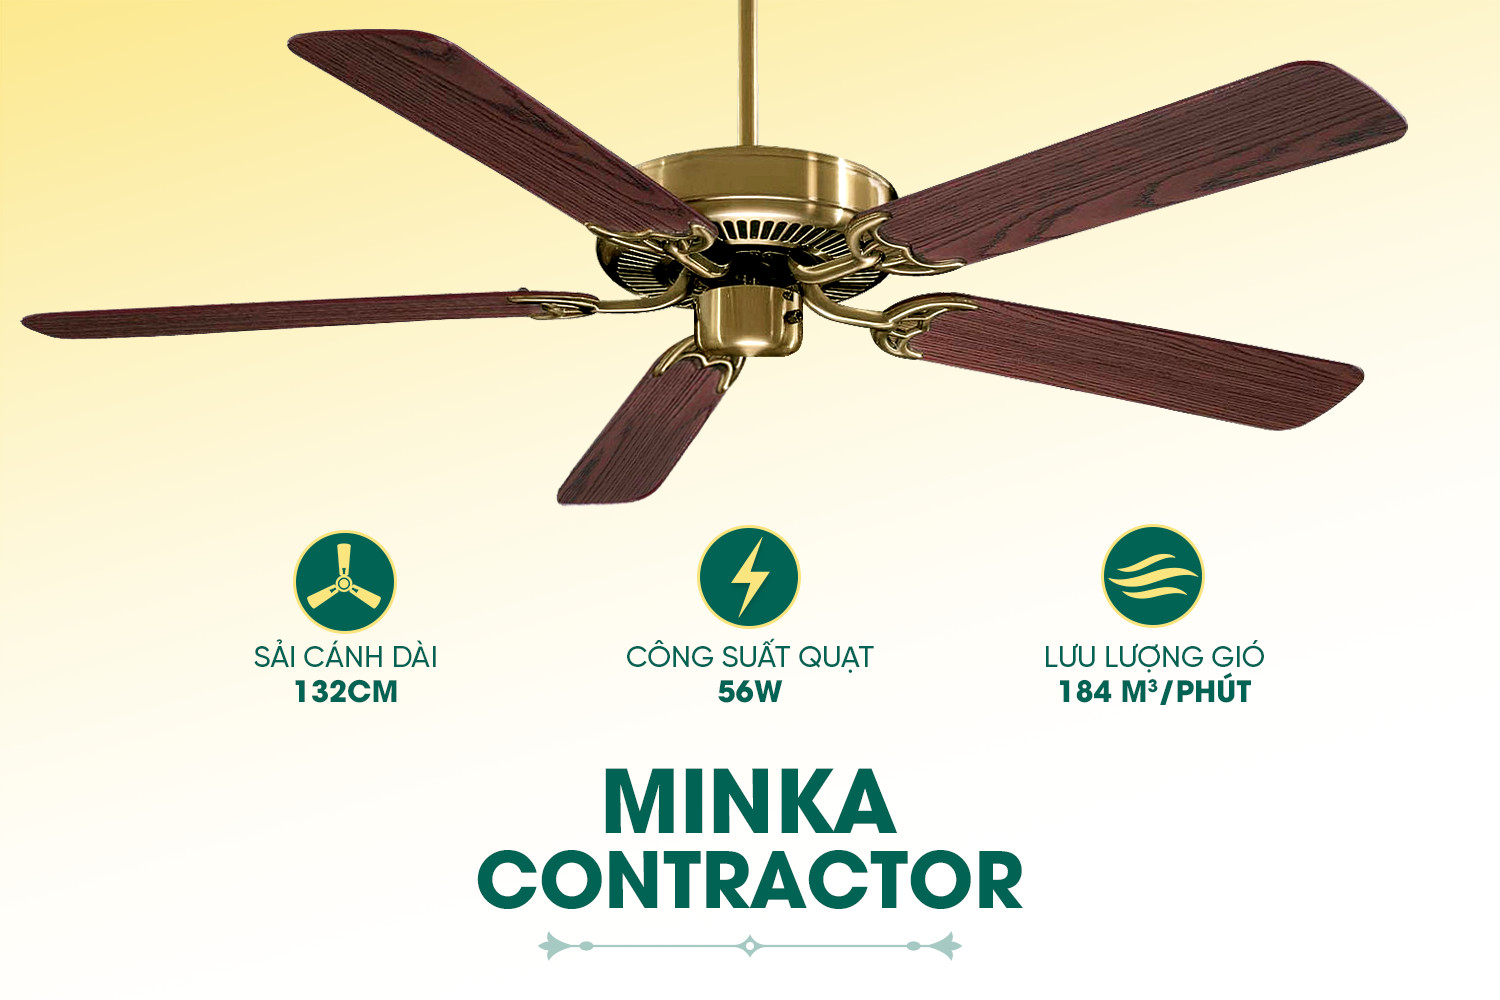 Minka Contractor 